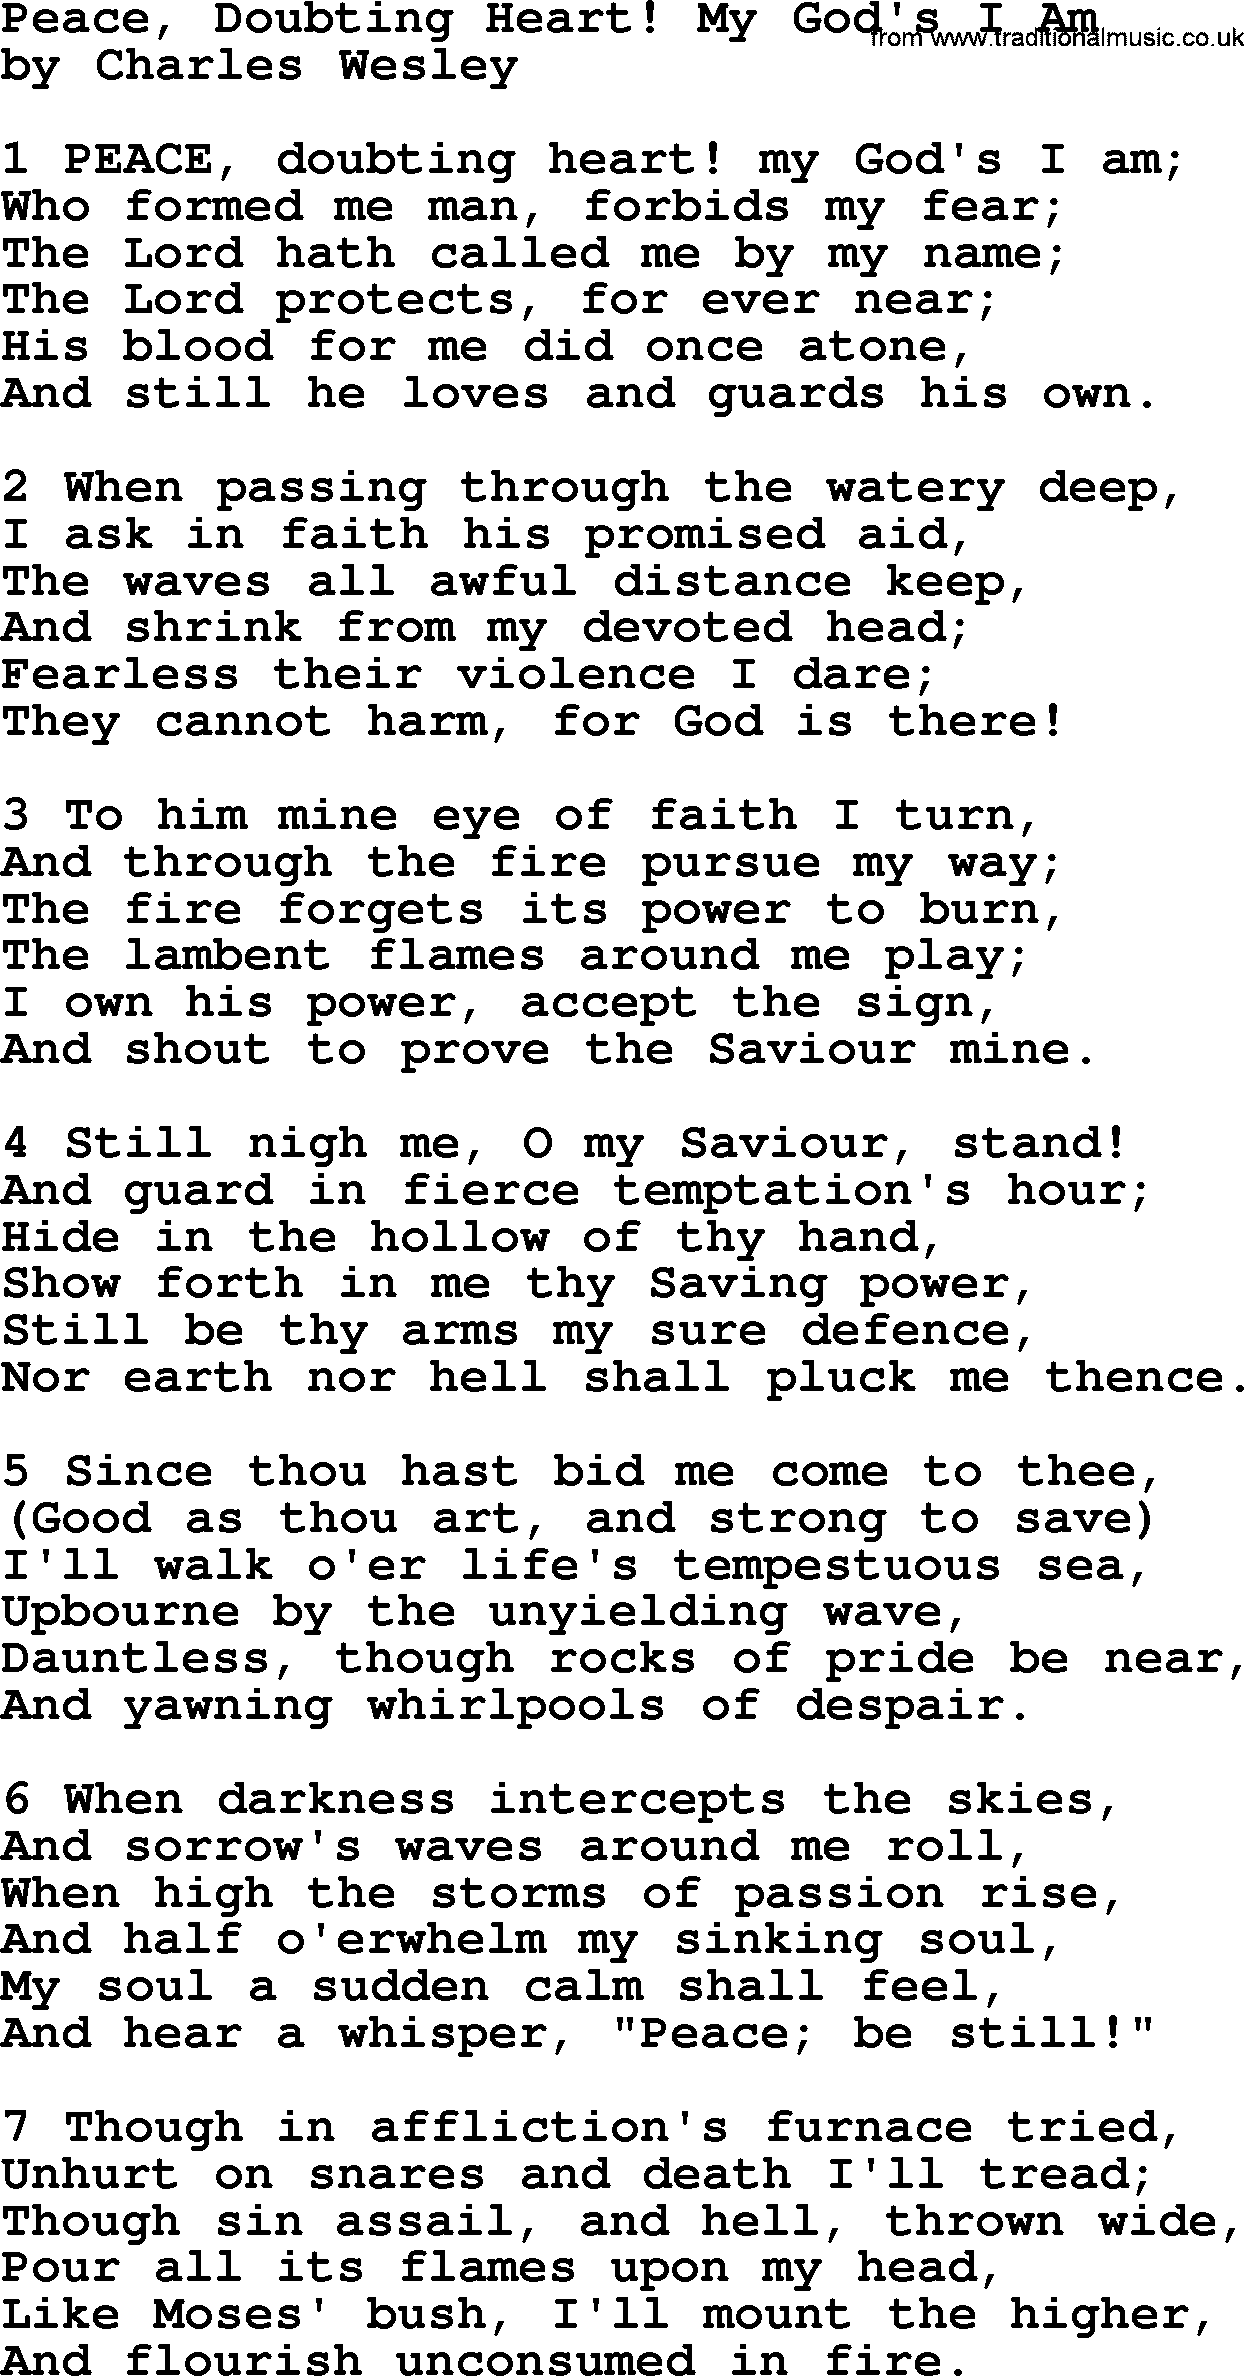 Charles Wesley hymn: Peace, Doubting Heart! My God's I Am, lyrics